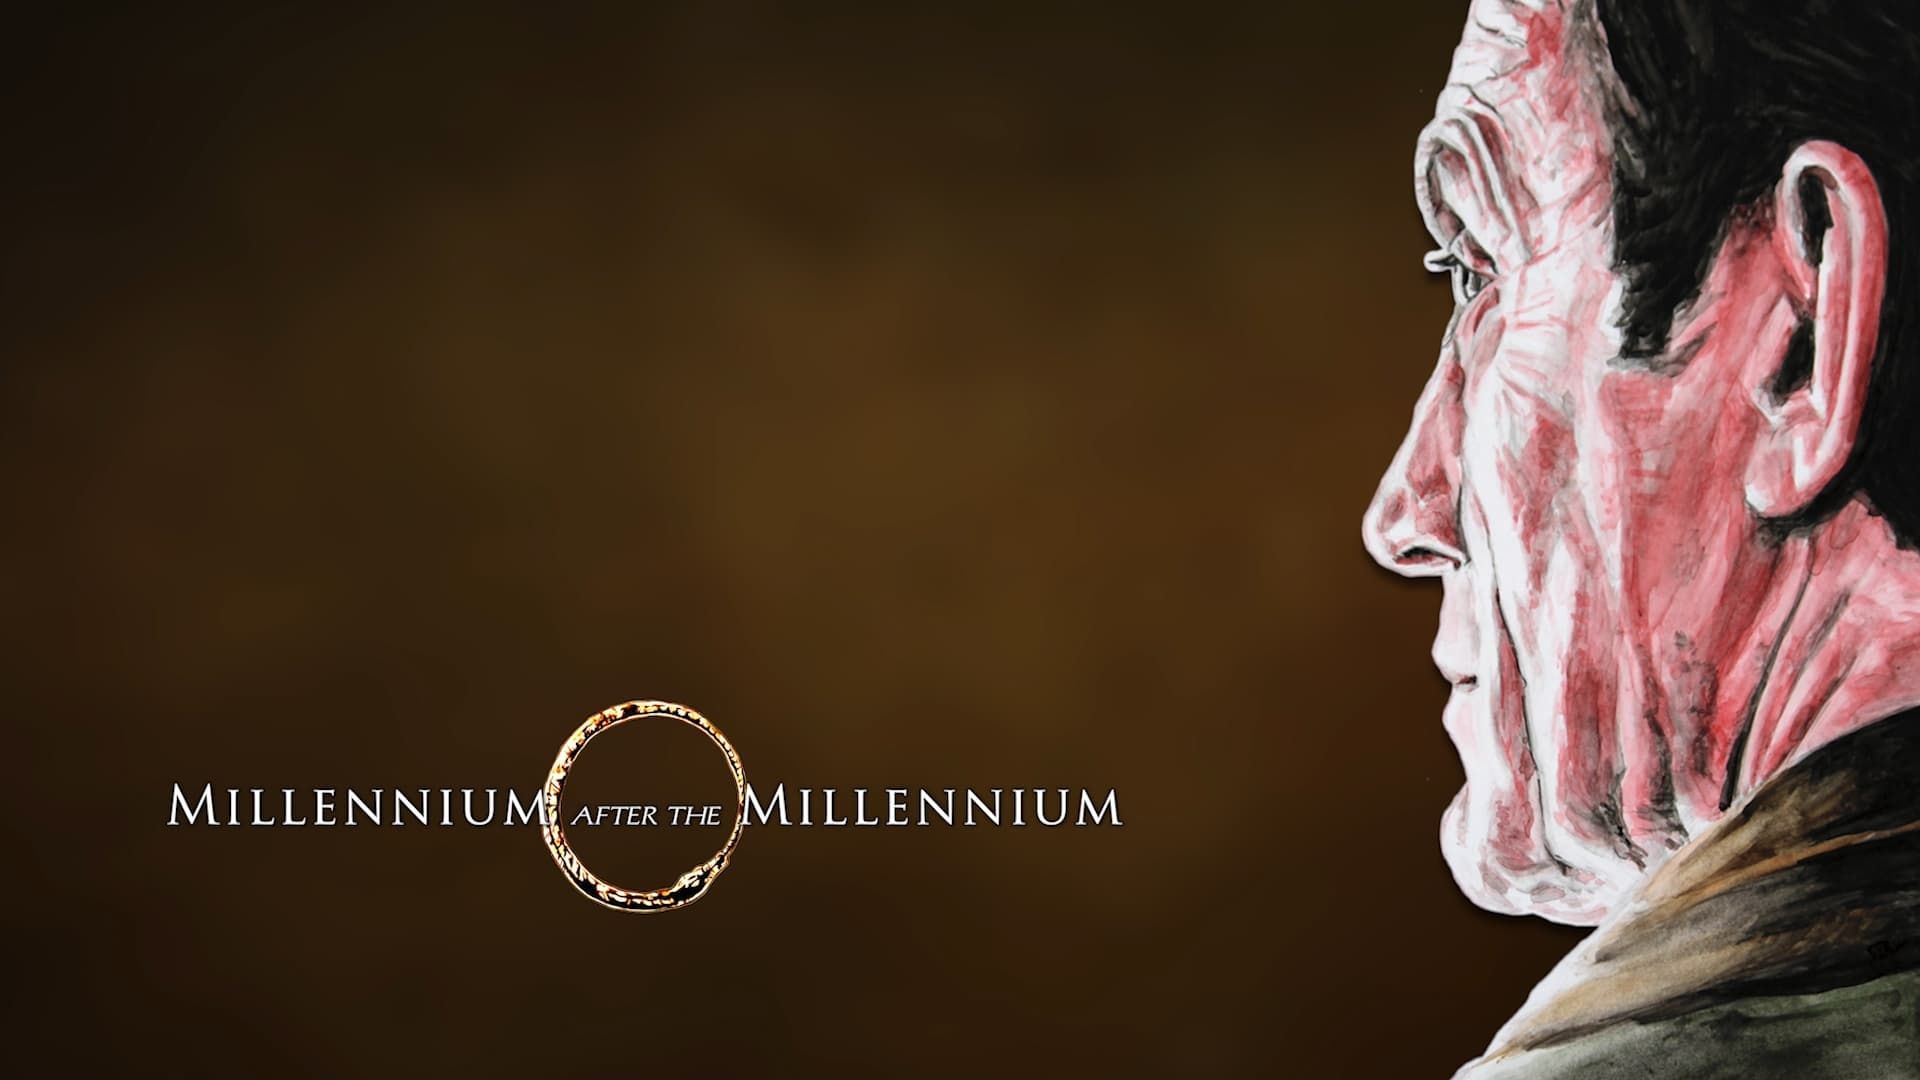 Millennium After the Millennium background